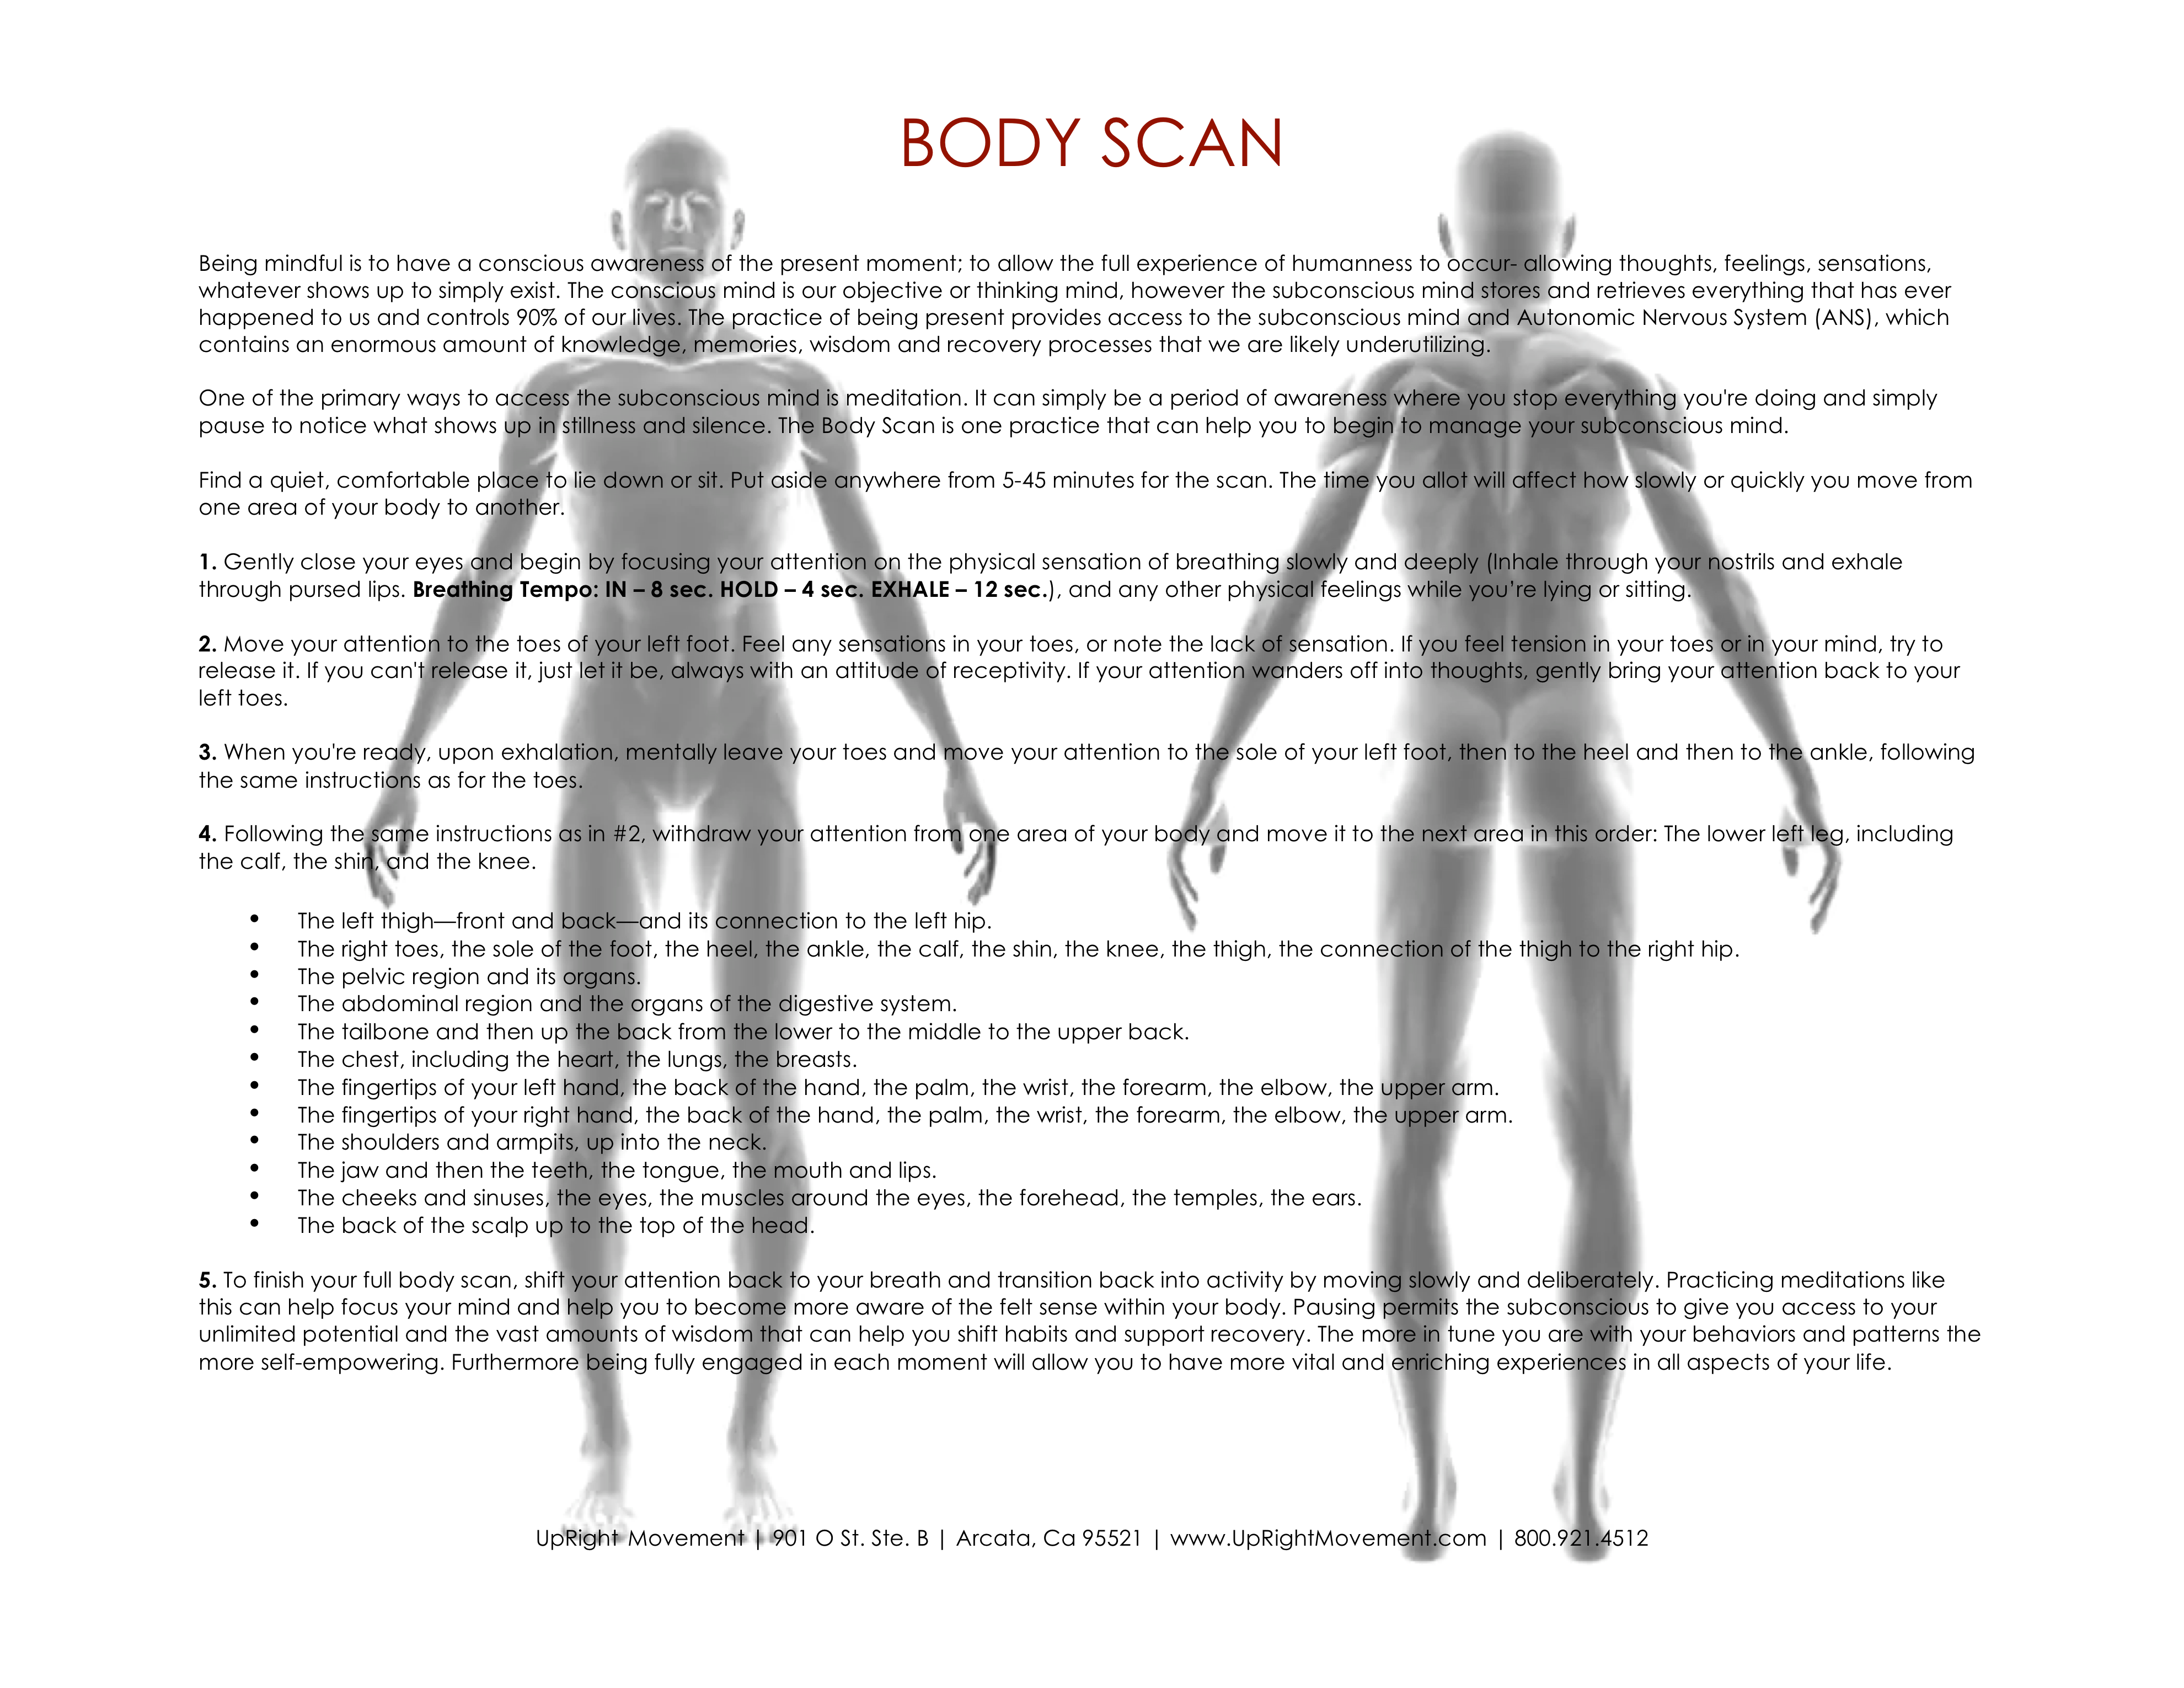 Practicing Awareness: Body Scan